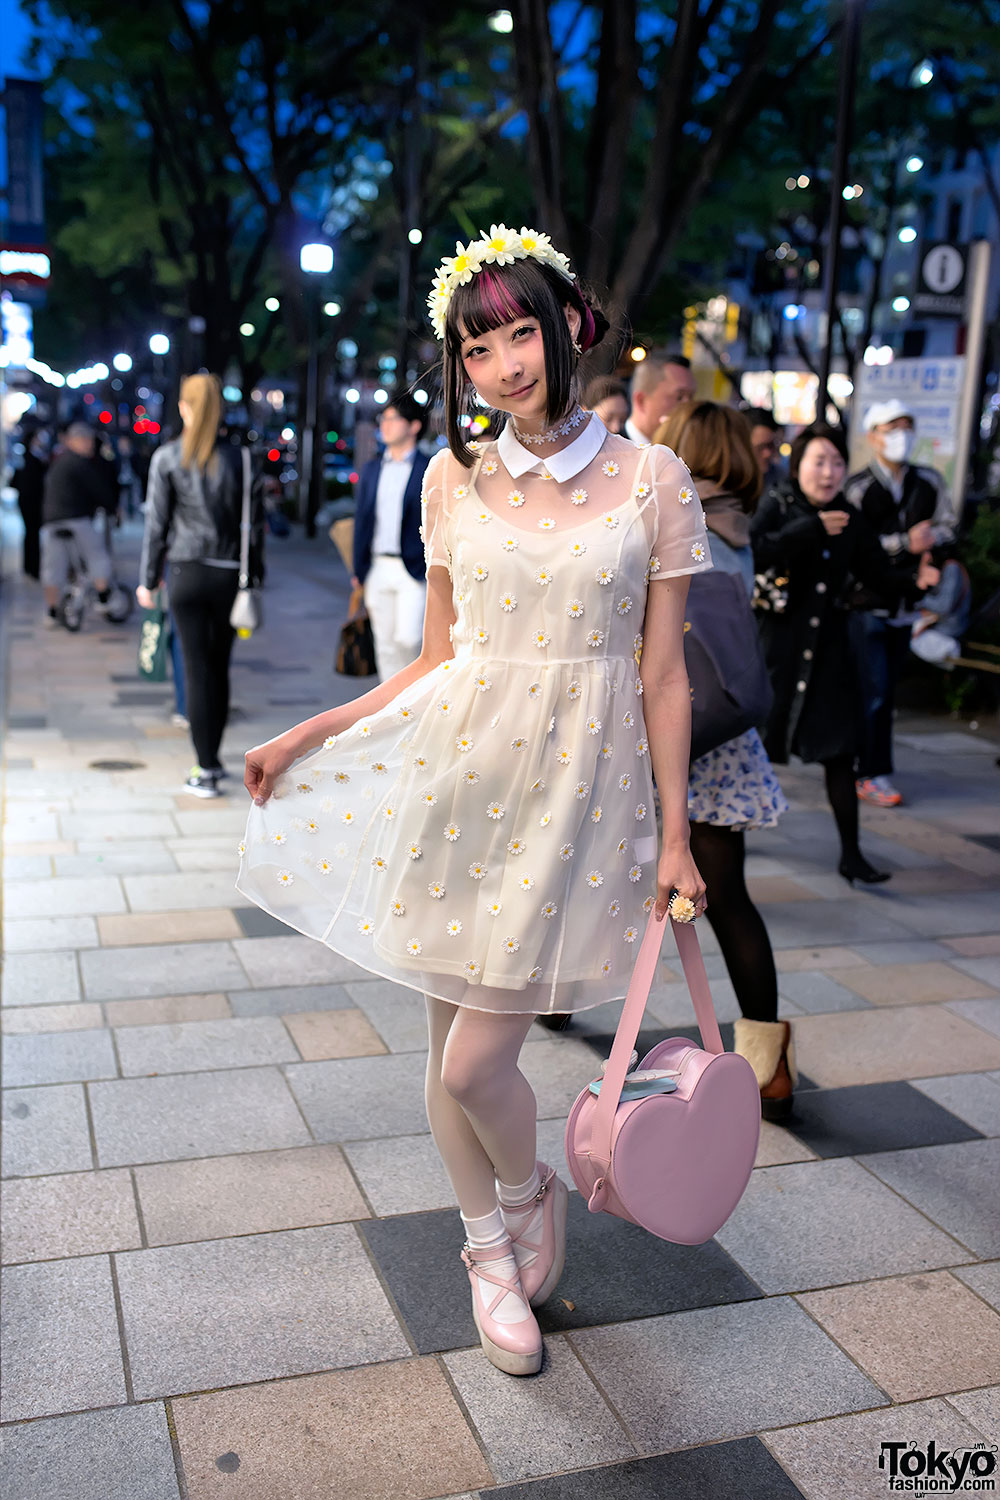 RinRin Doll in Harajuku w/ Flower Crown, LilLilly Flower Dress & Heart